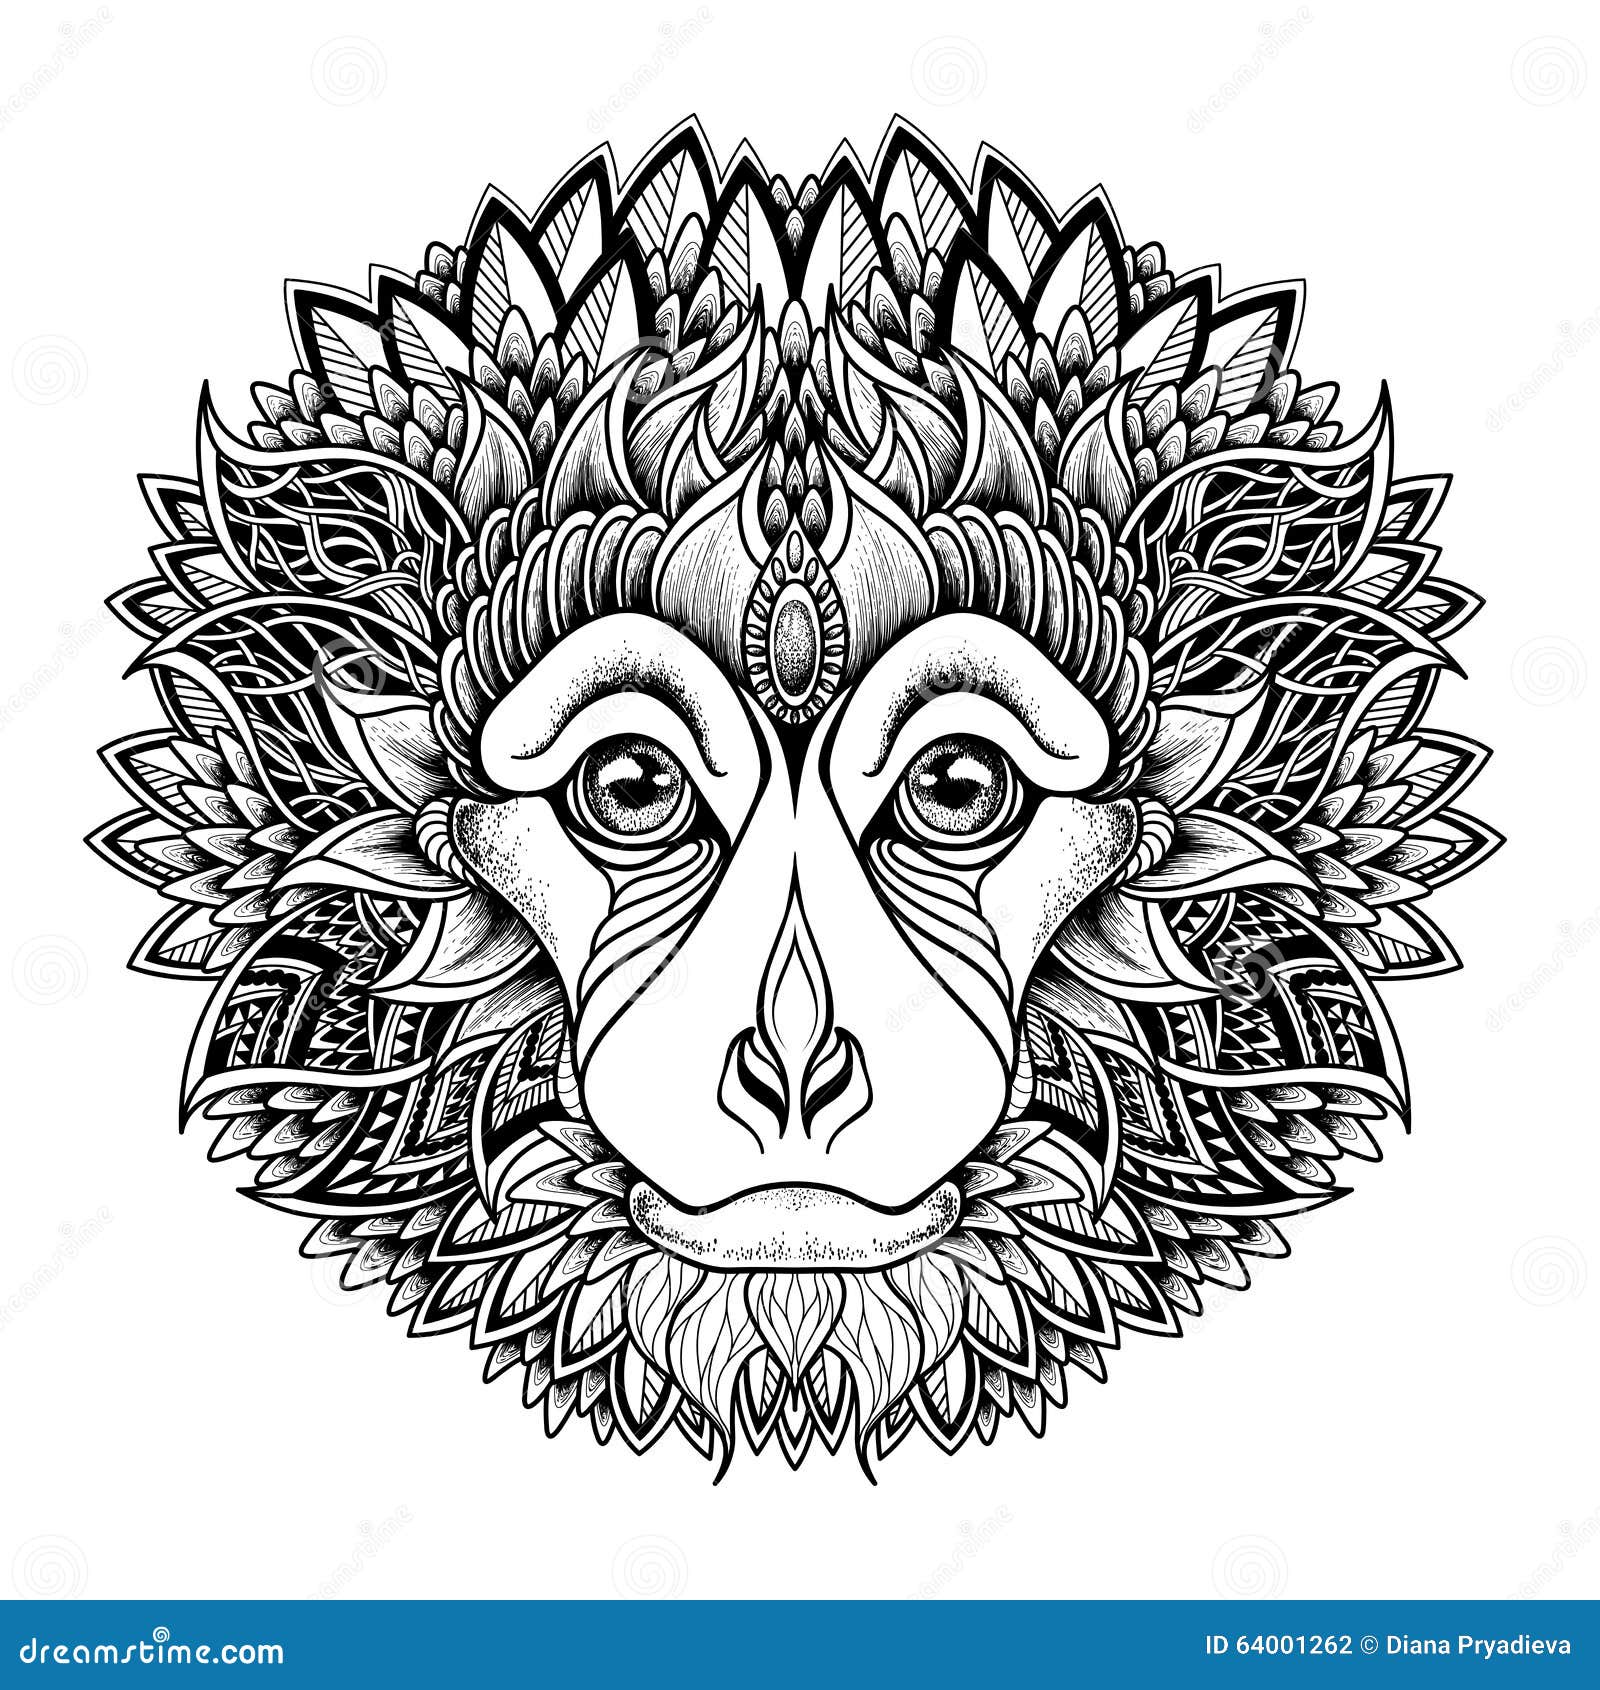 psychedelic monkey head tattoo. zentangle style